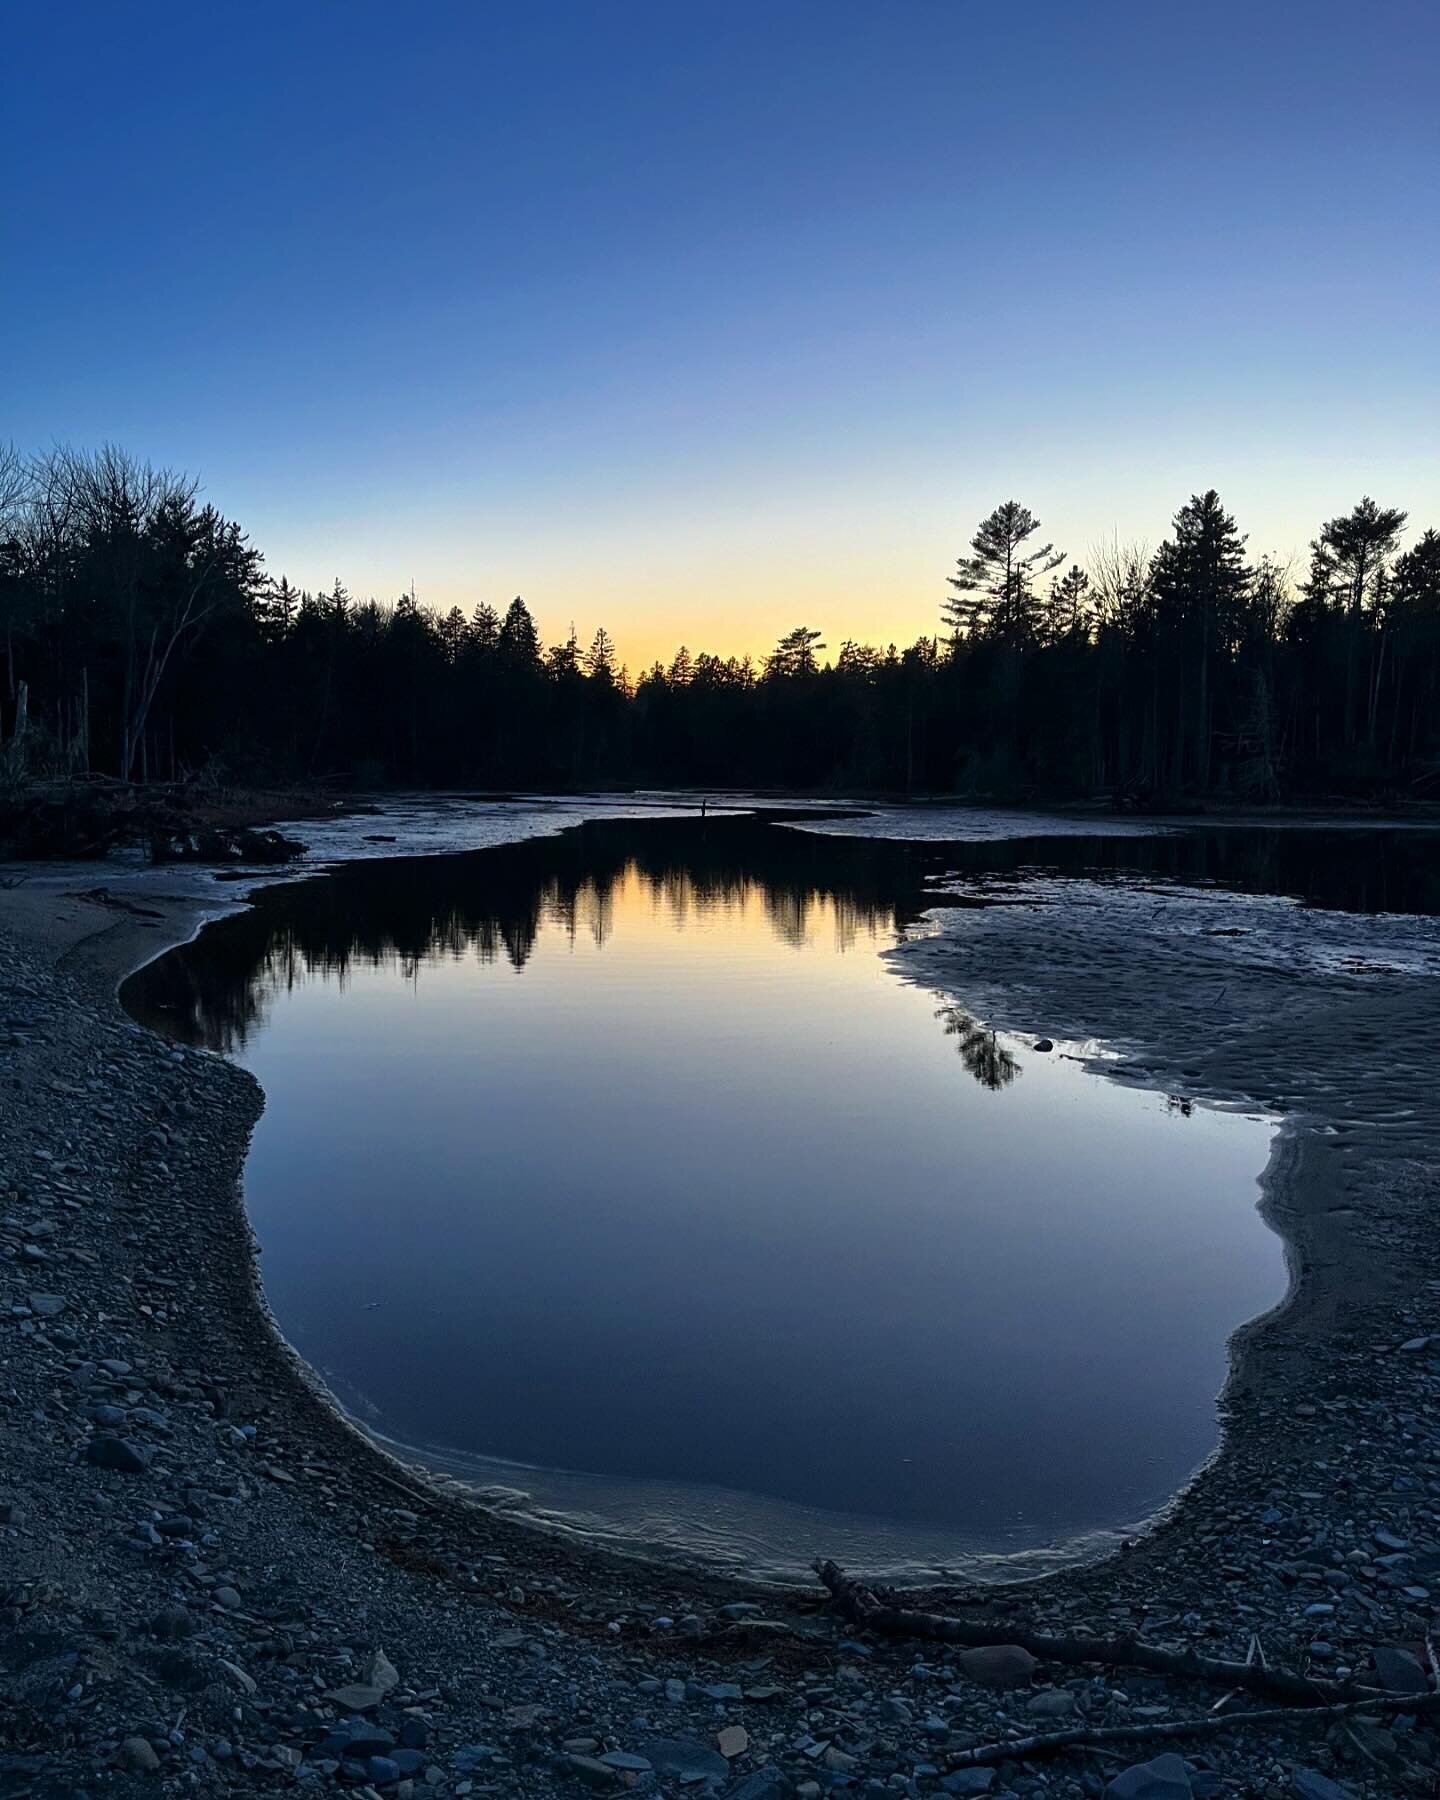 Hutchins Marsh pond at low tide. 

#marsh #wetland #climatechange #dusk #spring #lastlight #maine #islesboro #midcoast #coastalmaine #mainecoast #landtrust #conservation #conservationphotography